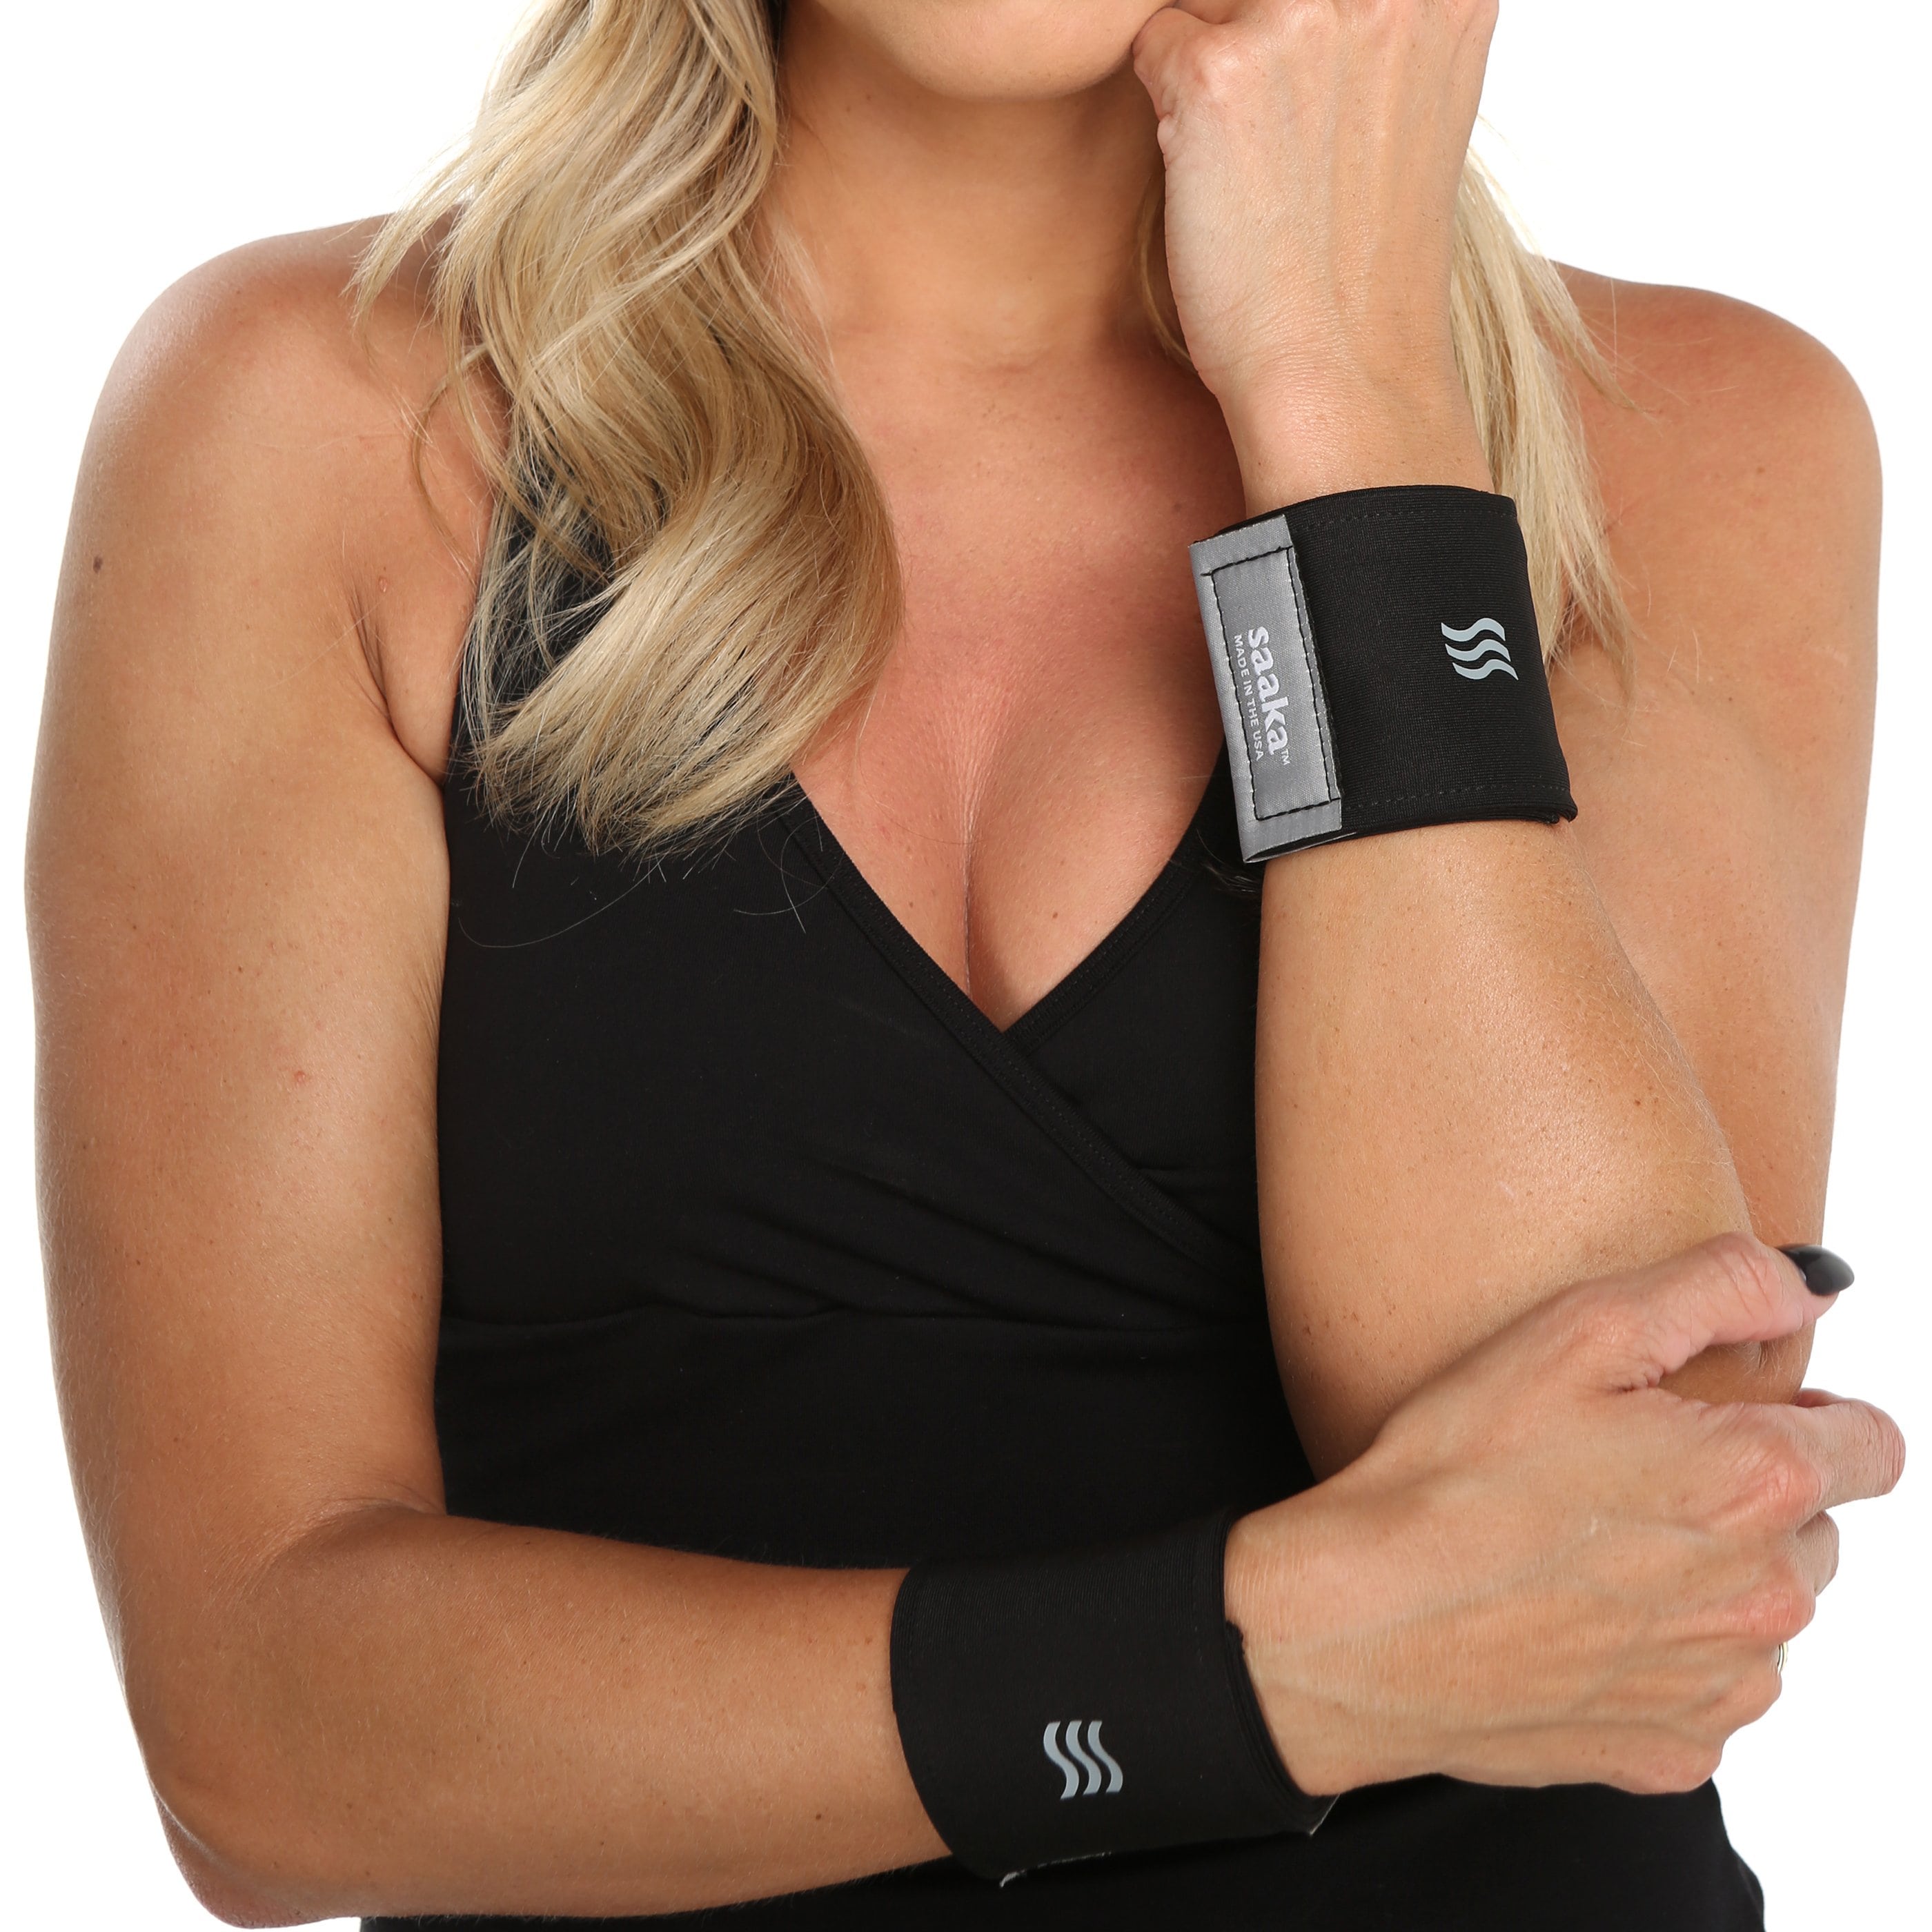 Multipurpose Hand Wrist Strap - Adjustable Nylon Wristlet Straps Keych –  Balar Overseas